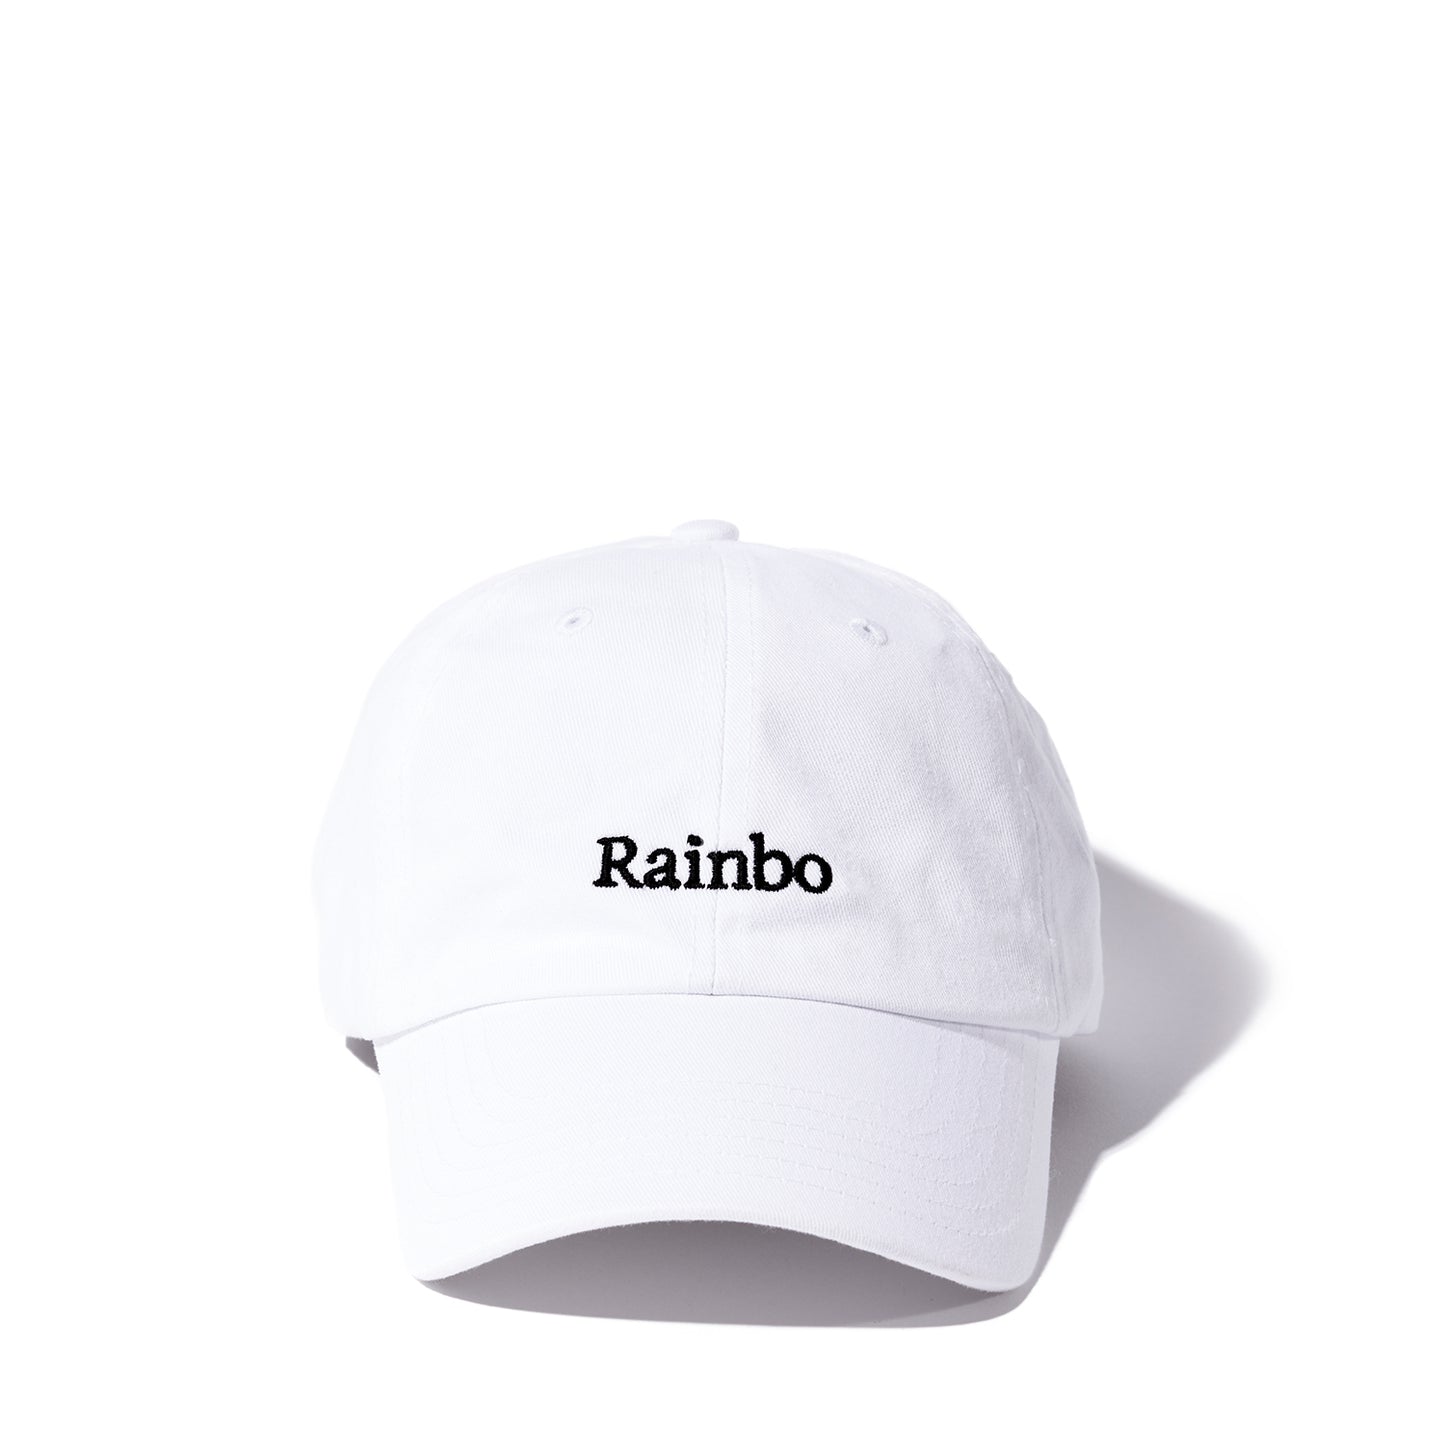 Rainbo Dad Hats